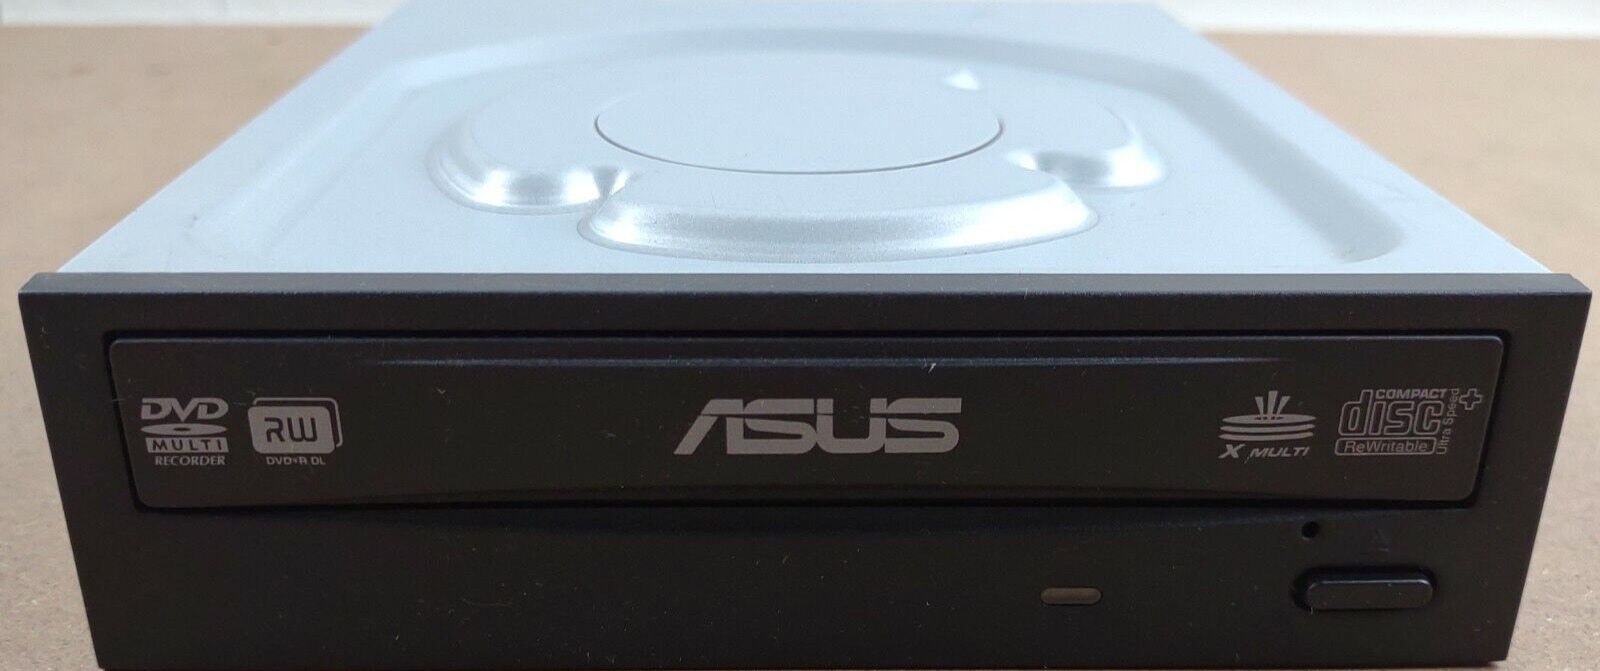 Asus - DRW-24B1ST - Internal Desktop PC DVD-RW Drive SATA Serial ATA - Black